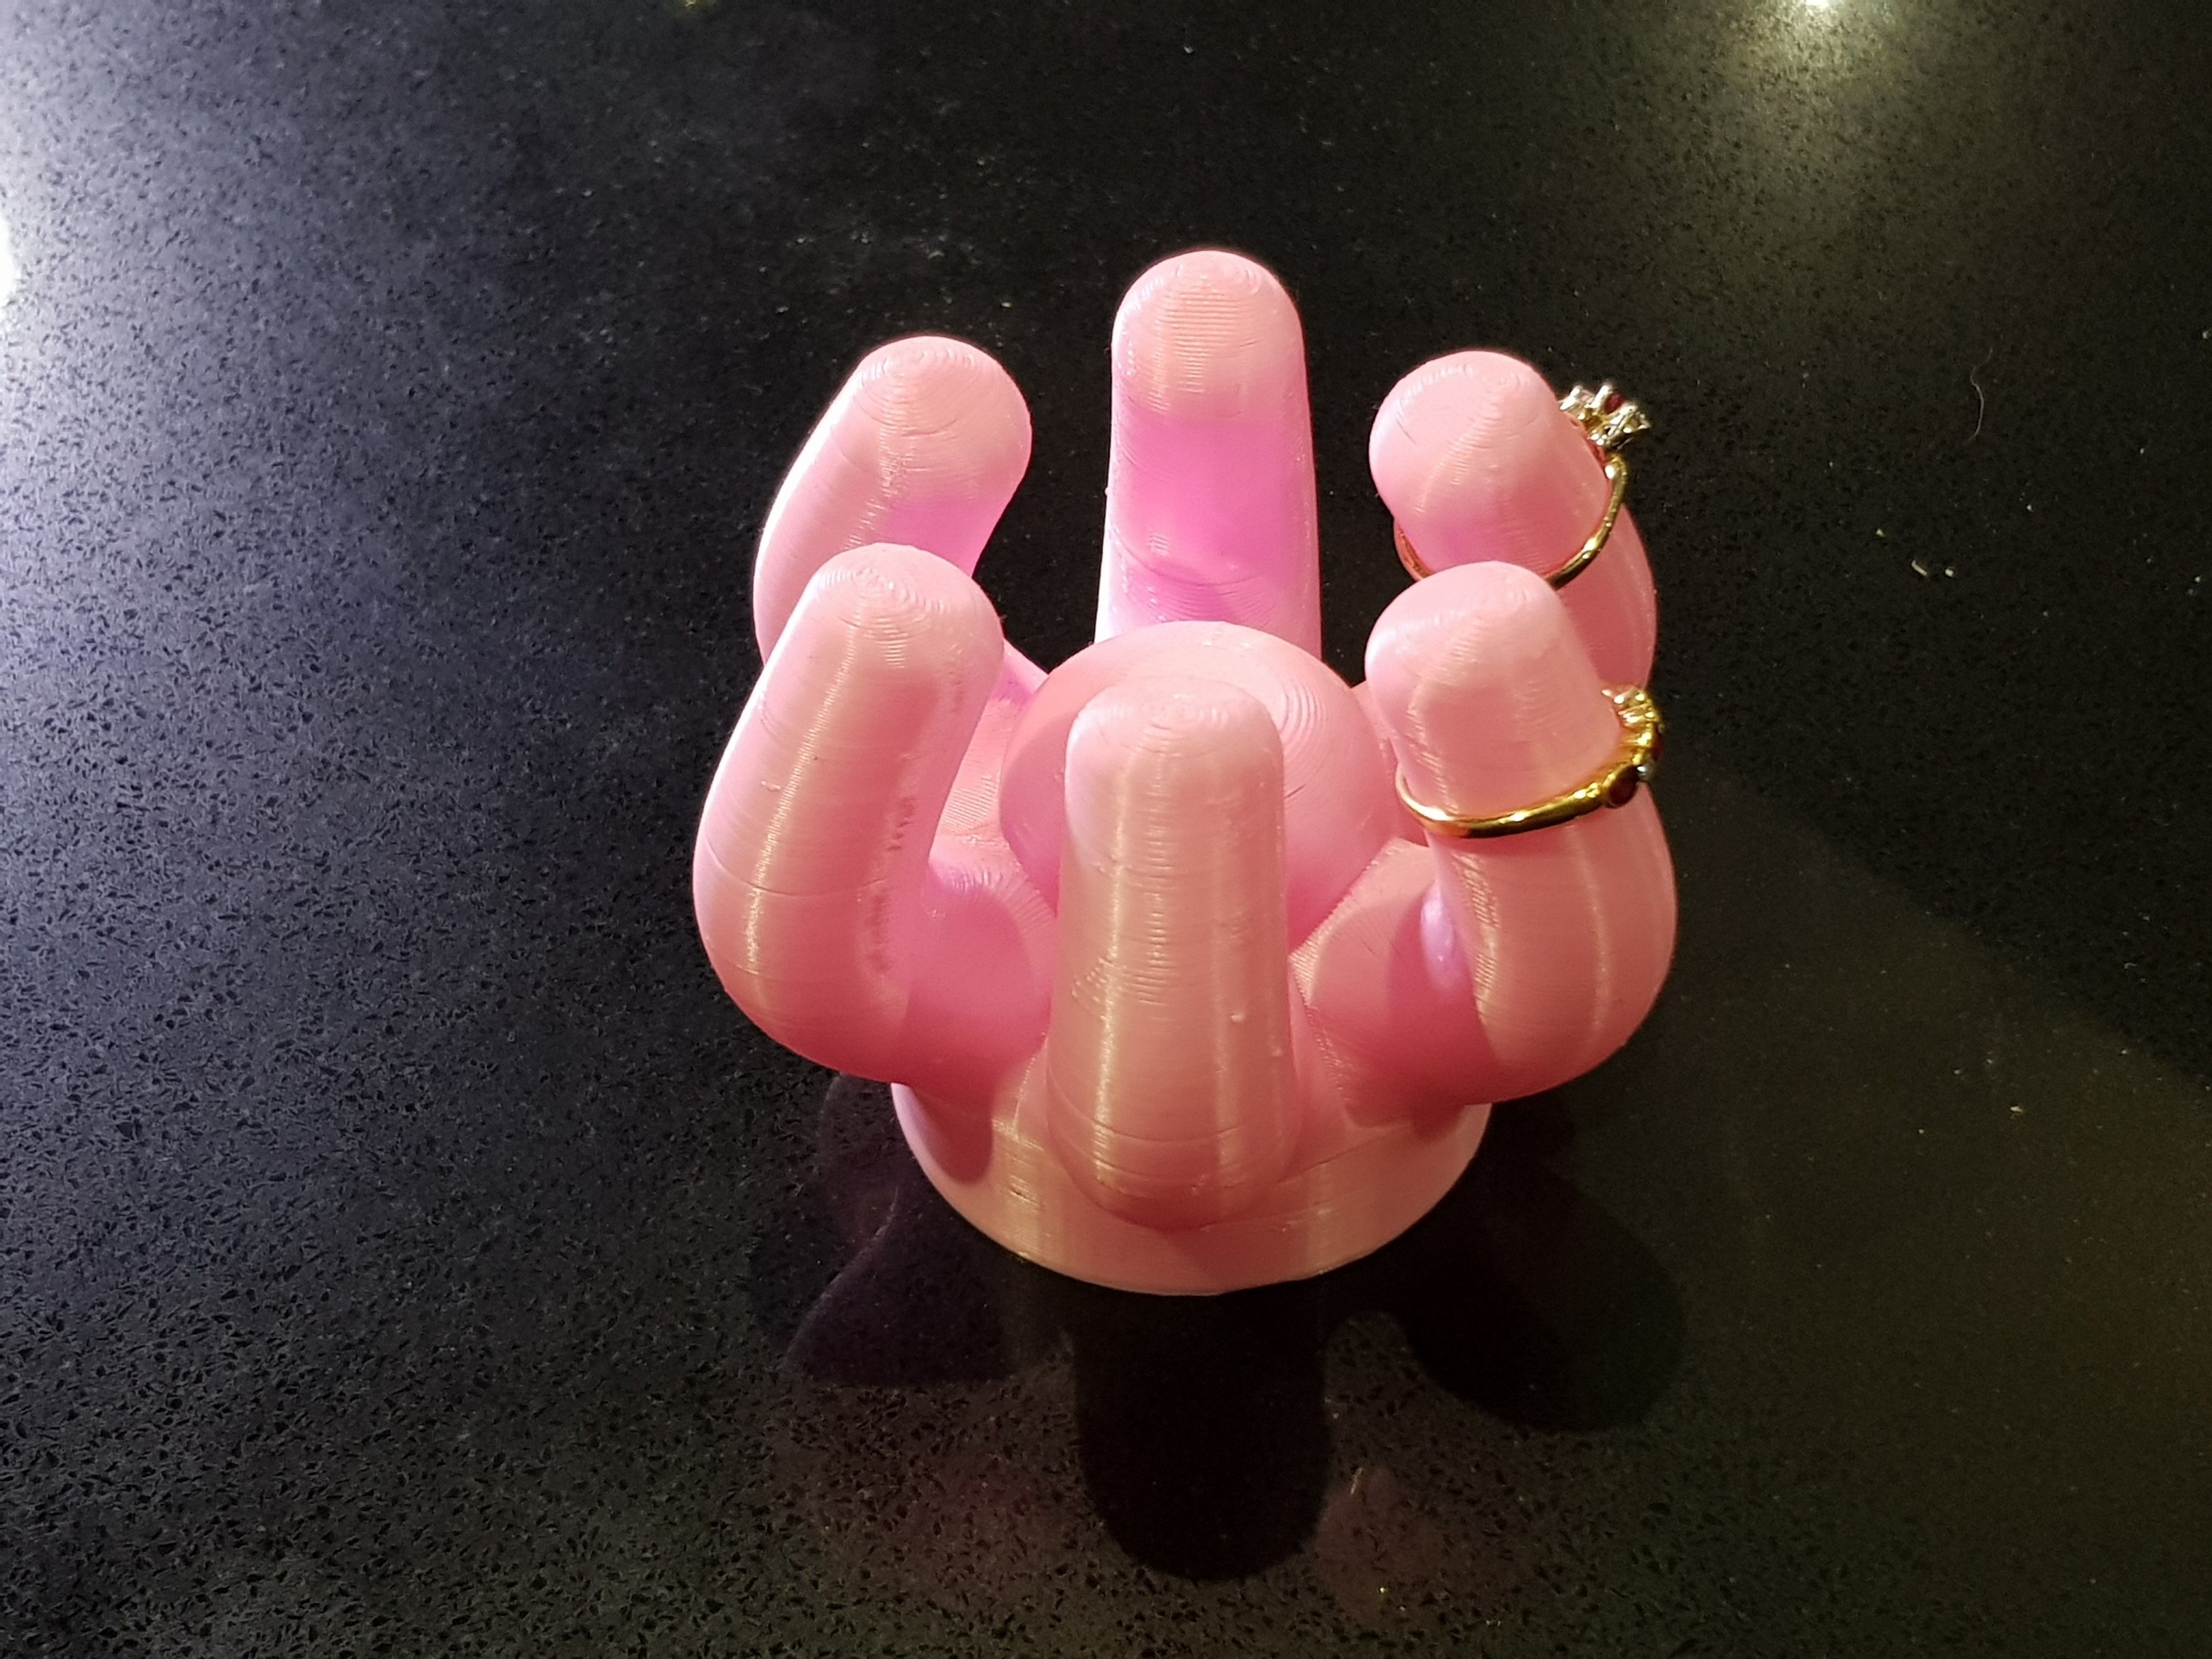 20181120_165901.jpg Download STL file Ring Fingers • 3D printable object, 3D-Designs